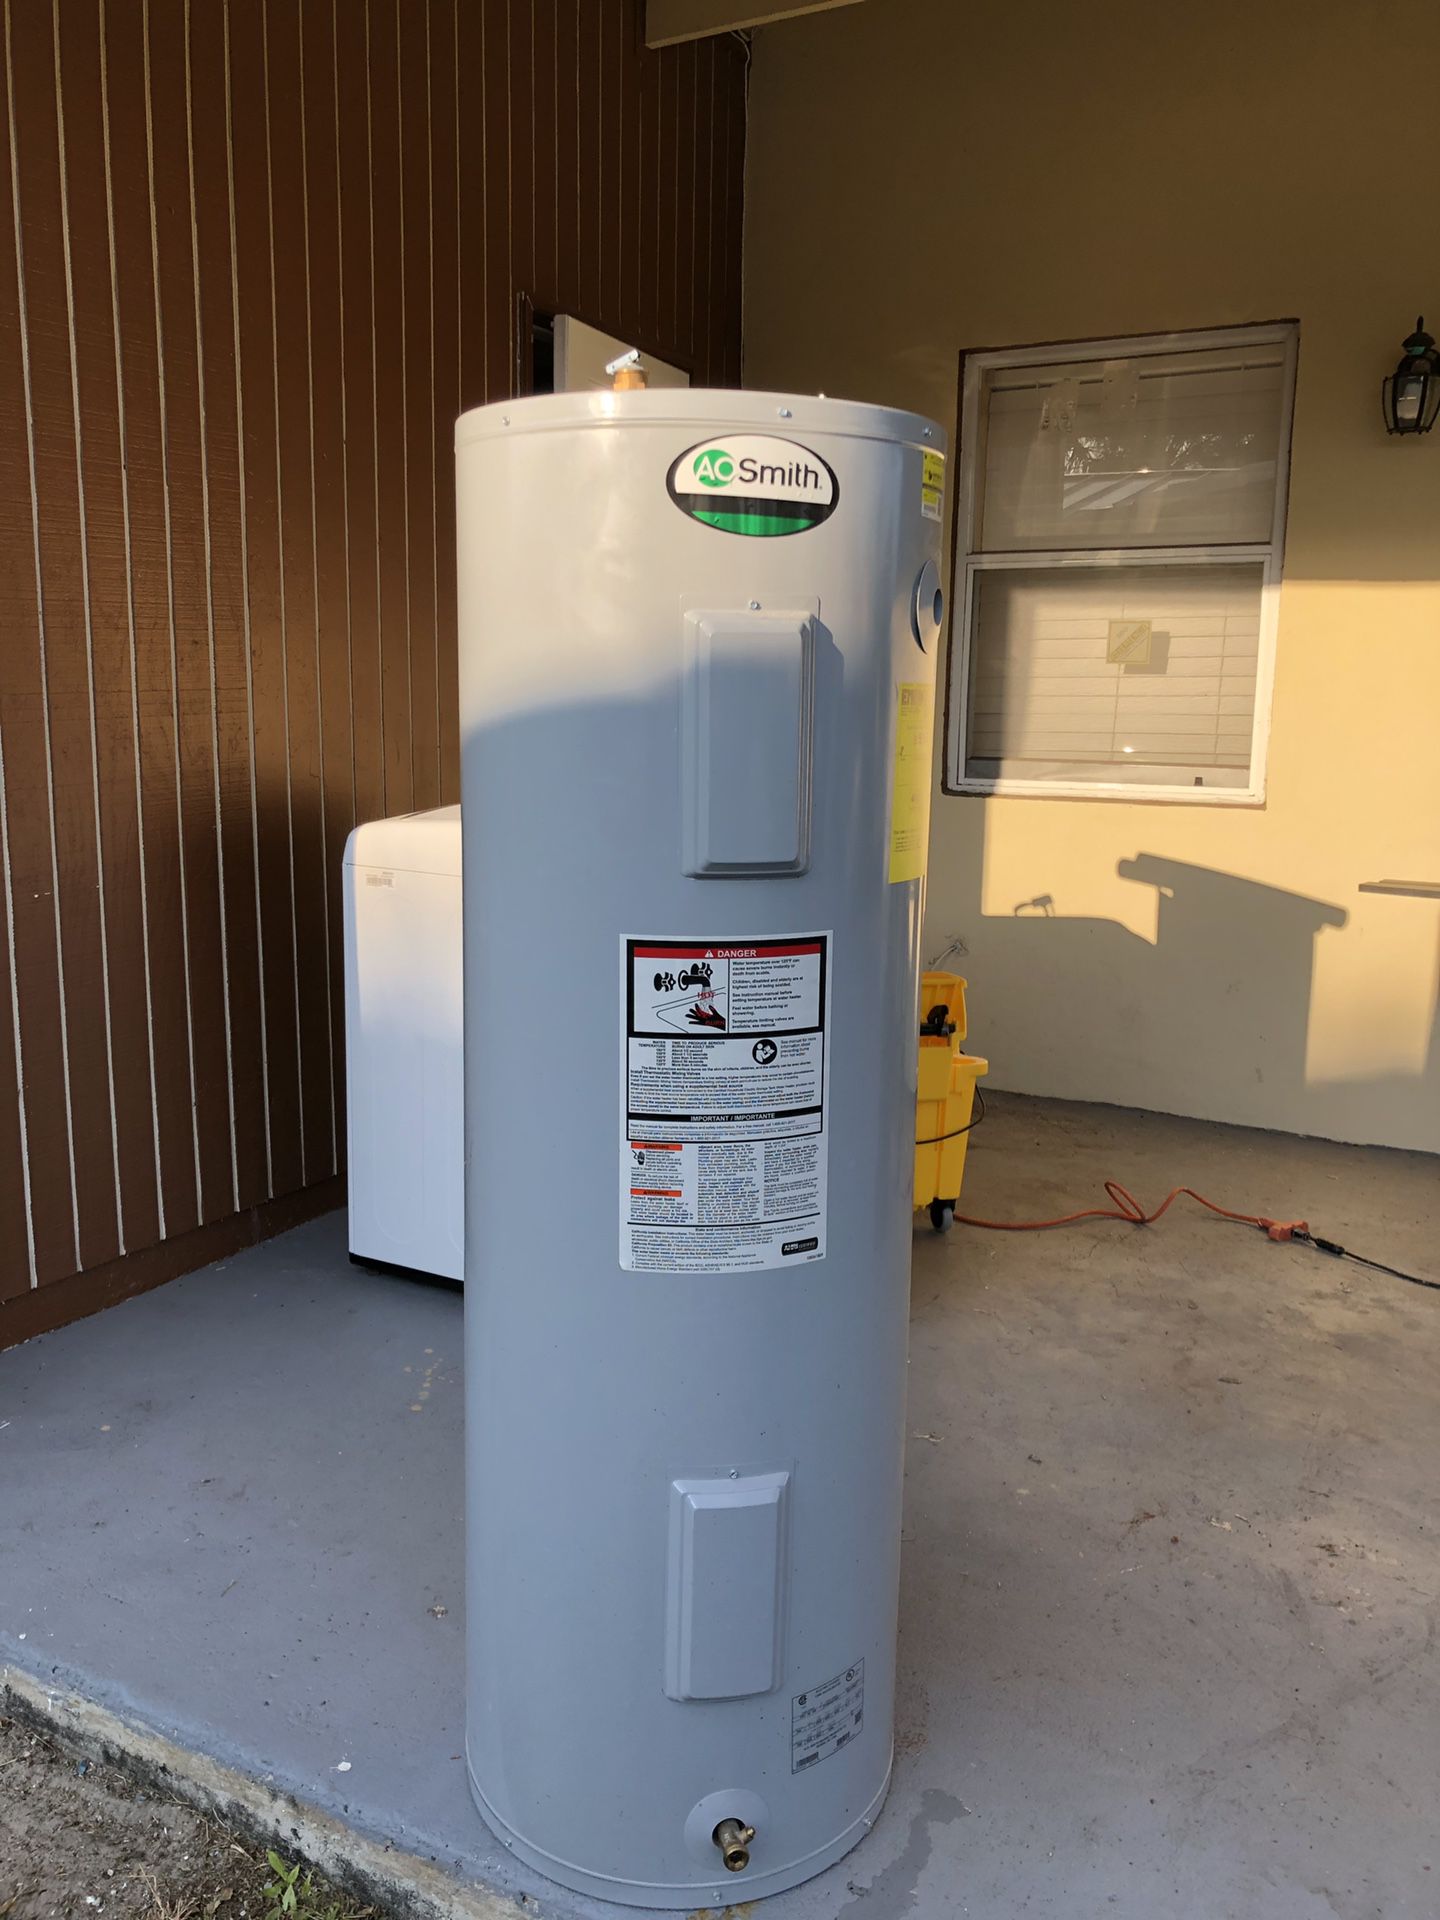 Aosmith hot water heater 59 gallons